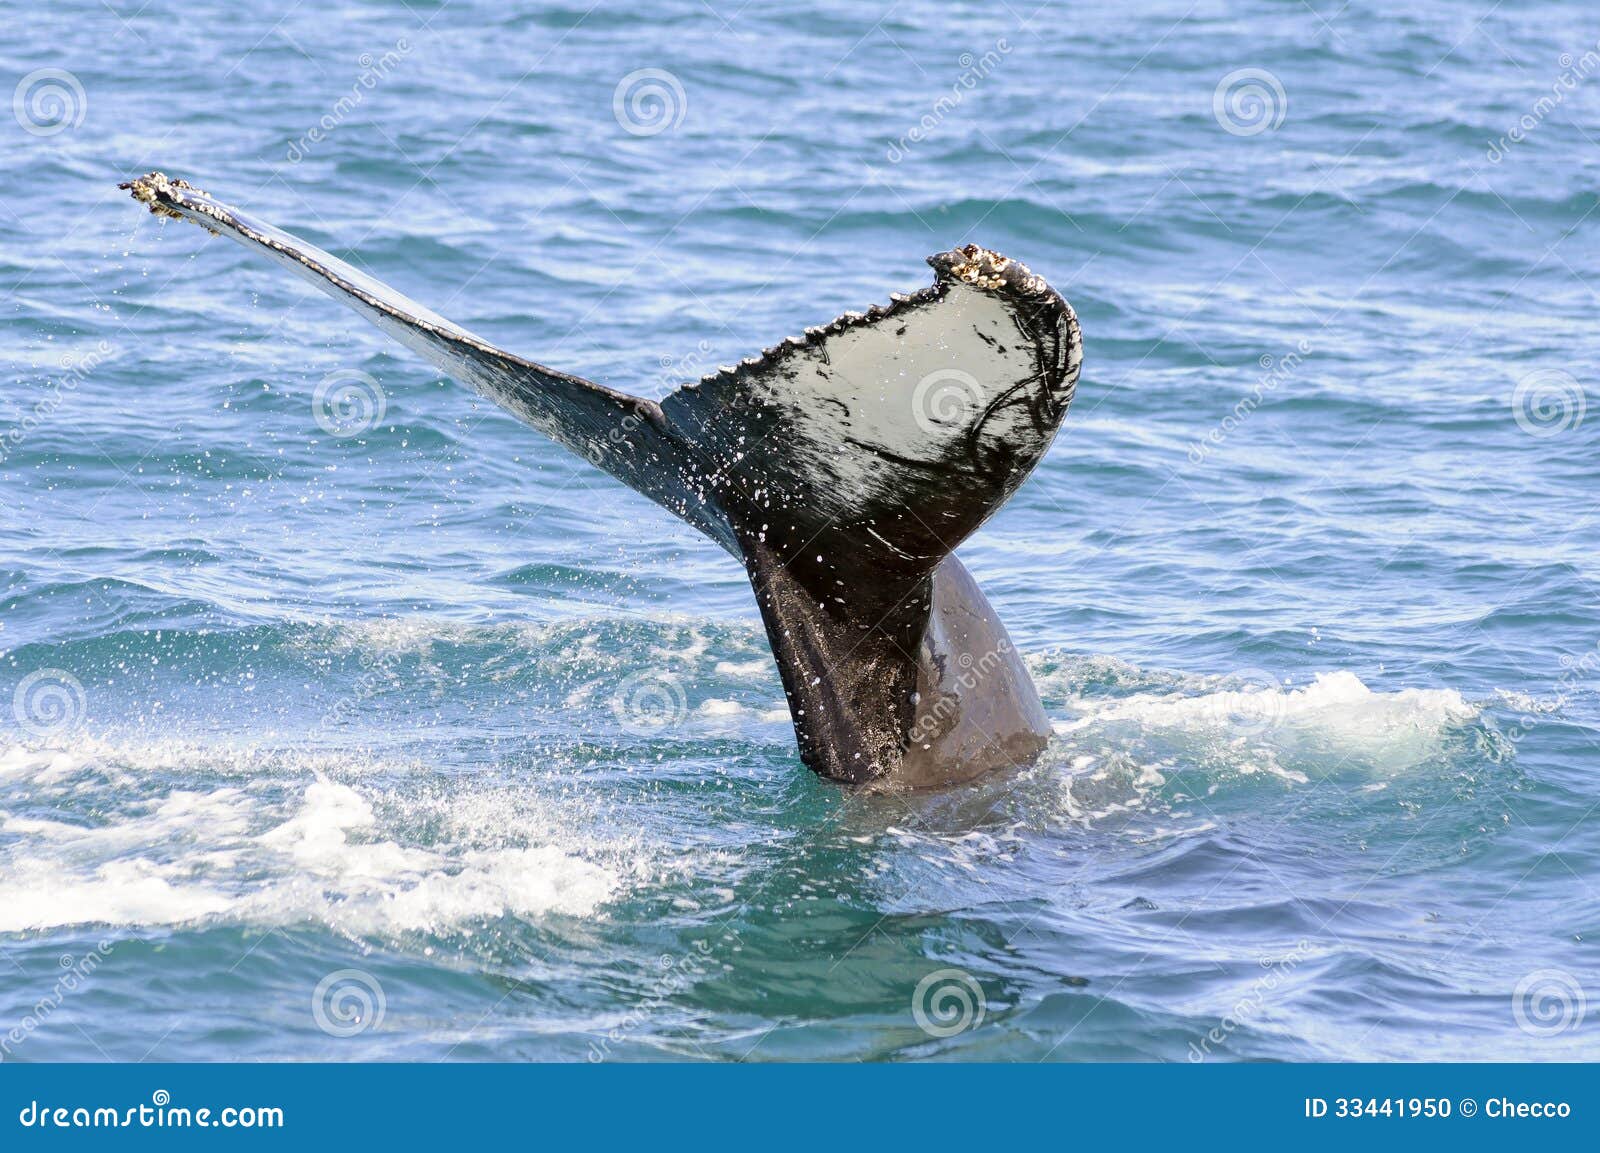 humpback whale tail in skjalfandi bay